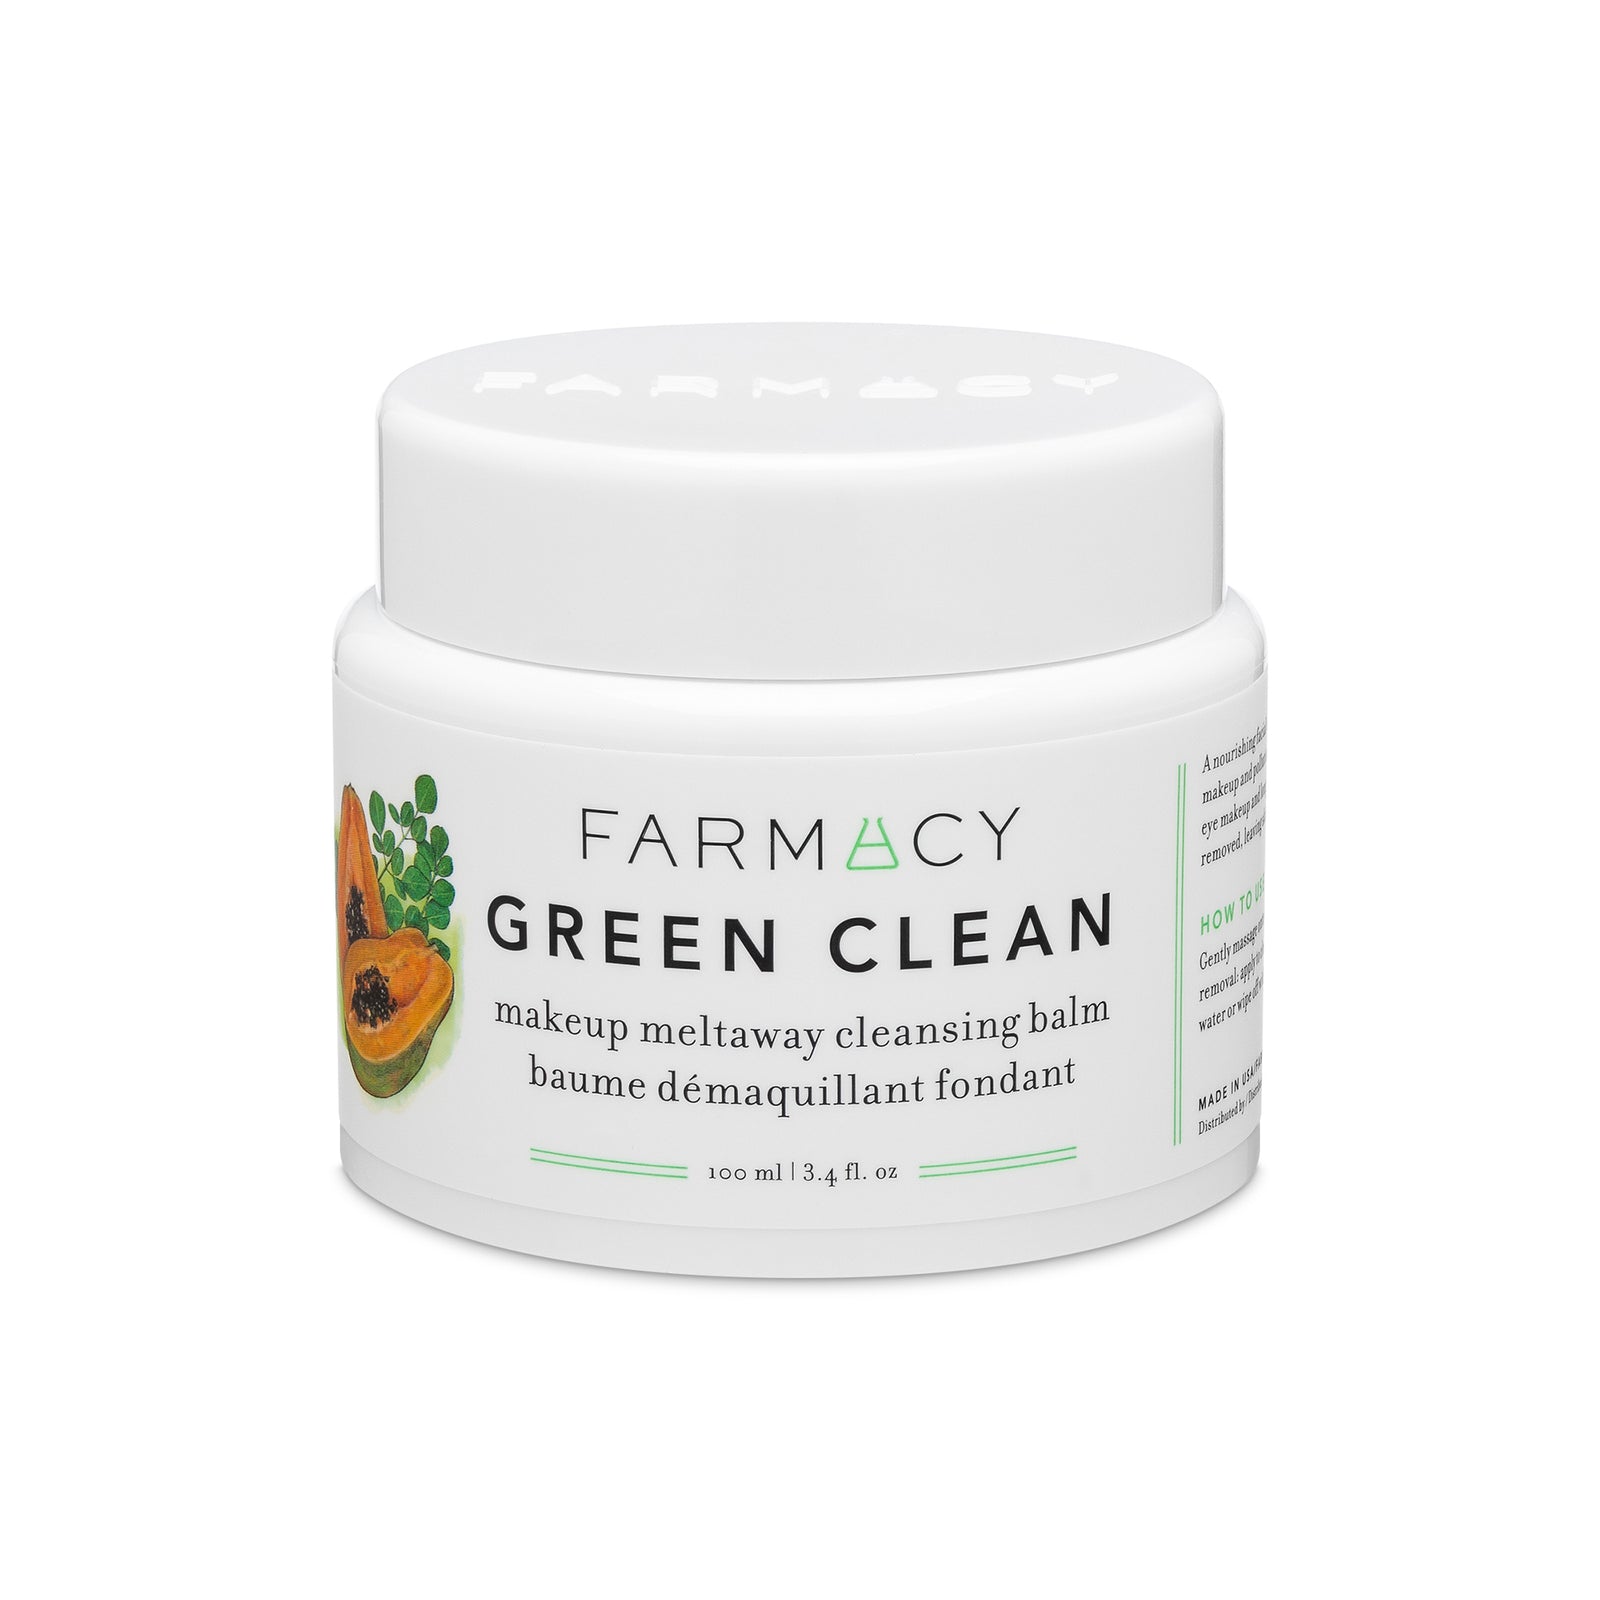 Green Clean cleansing balm